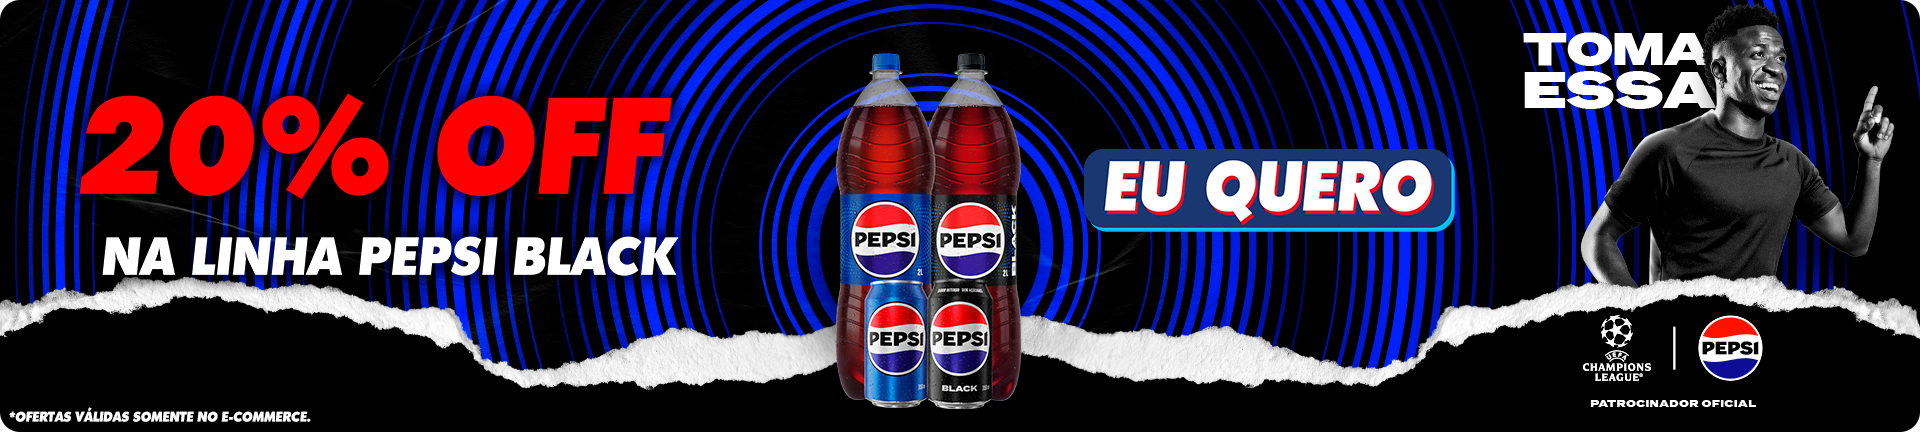 Pepsi20off_Abr_I16_F30